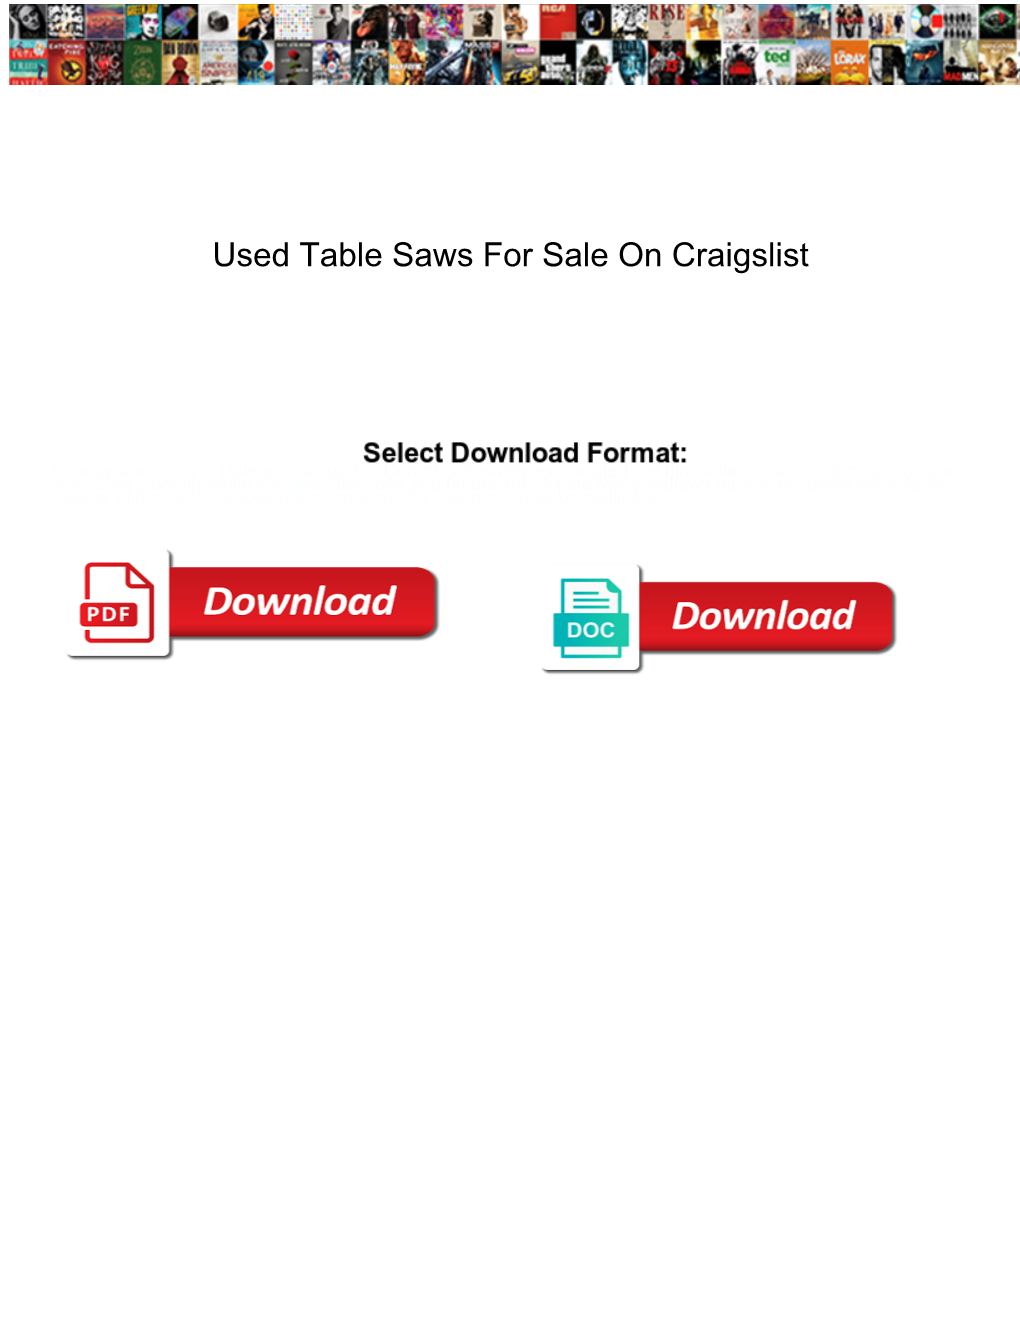 Used Table Saws for Sale on Craigslist